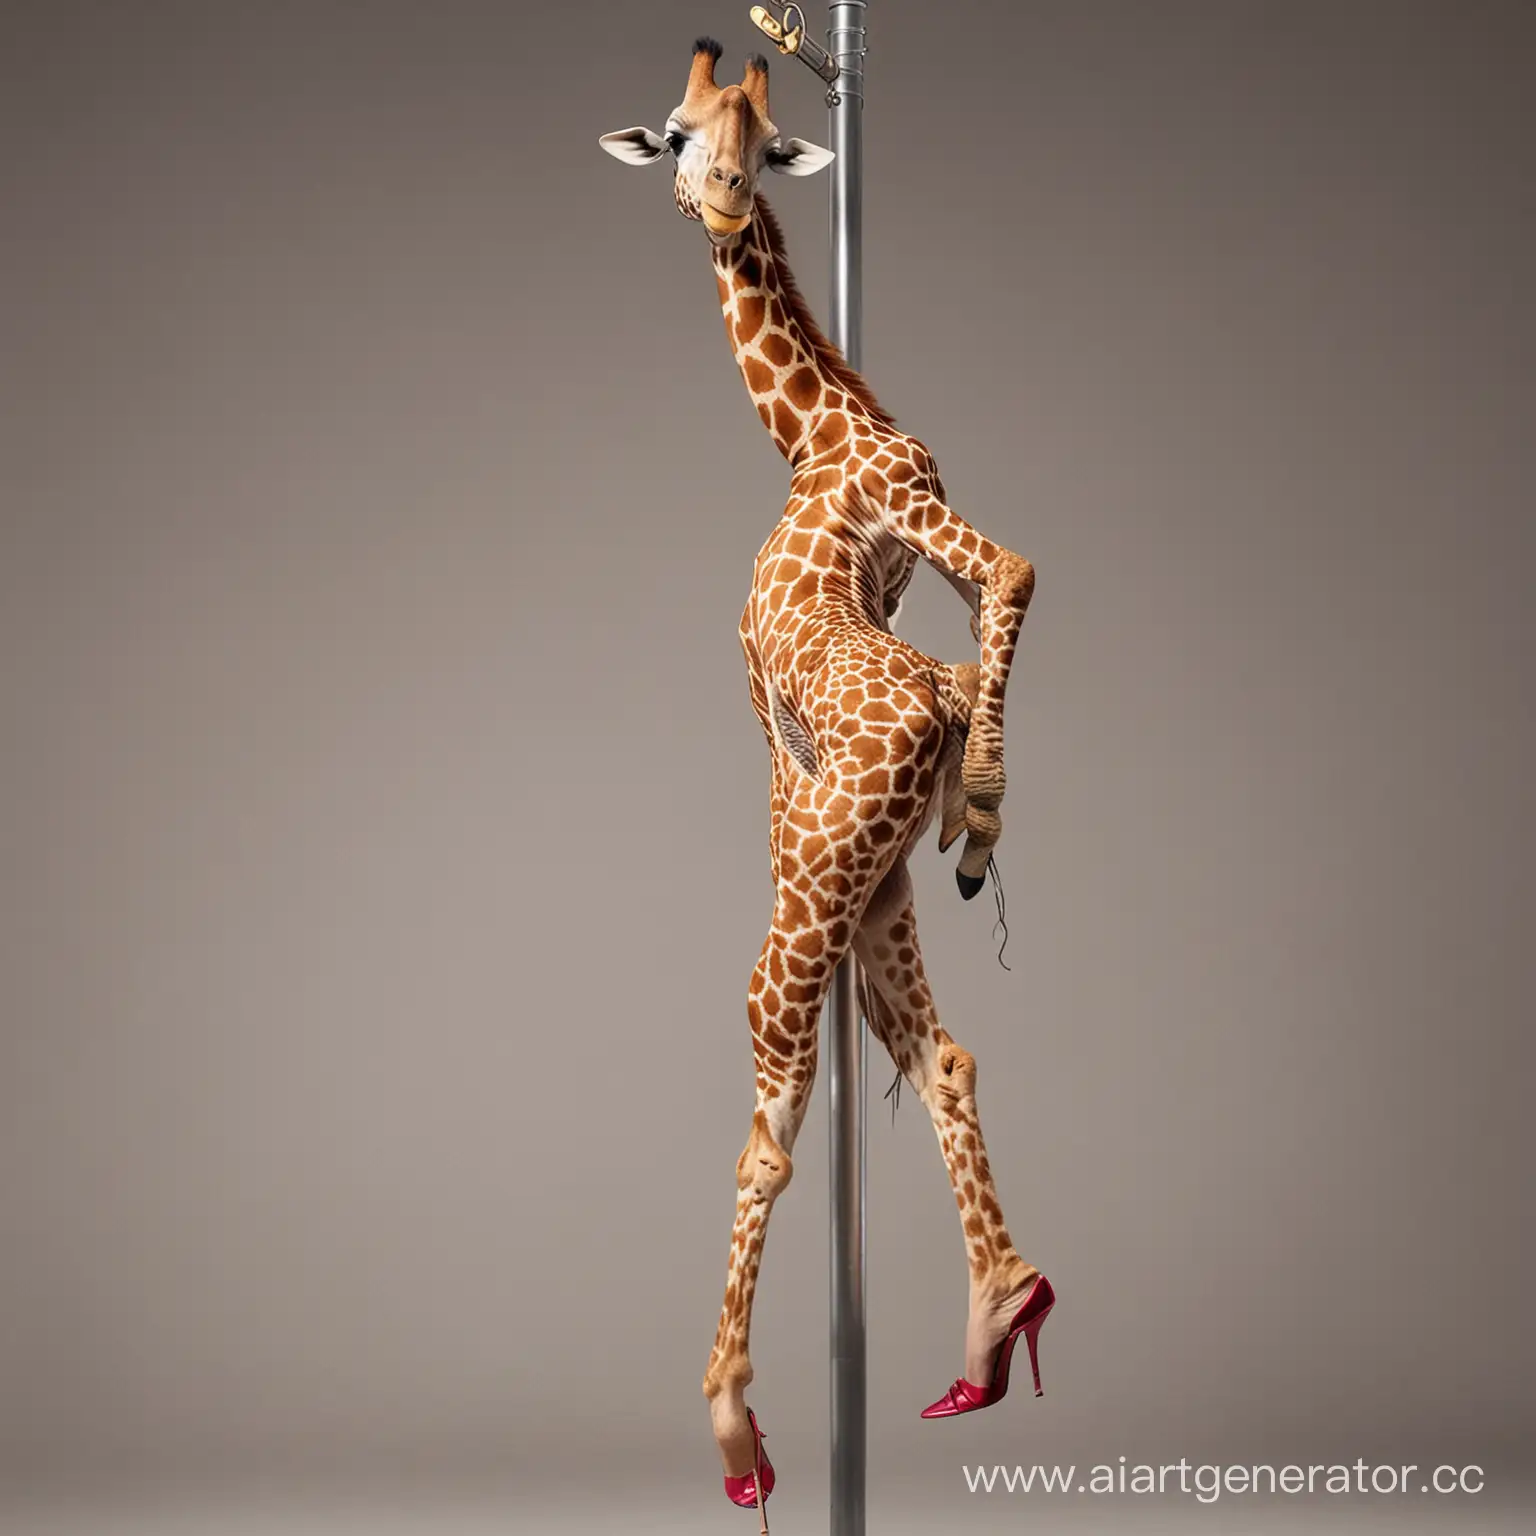 Graceful-Giraffe-Dancing-in-Lingerie-and-High-Heels